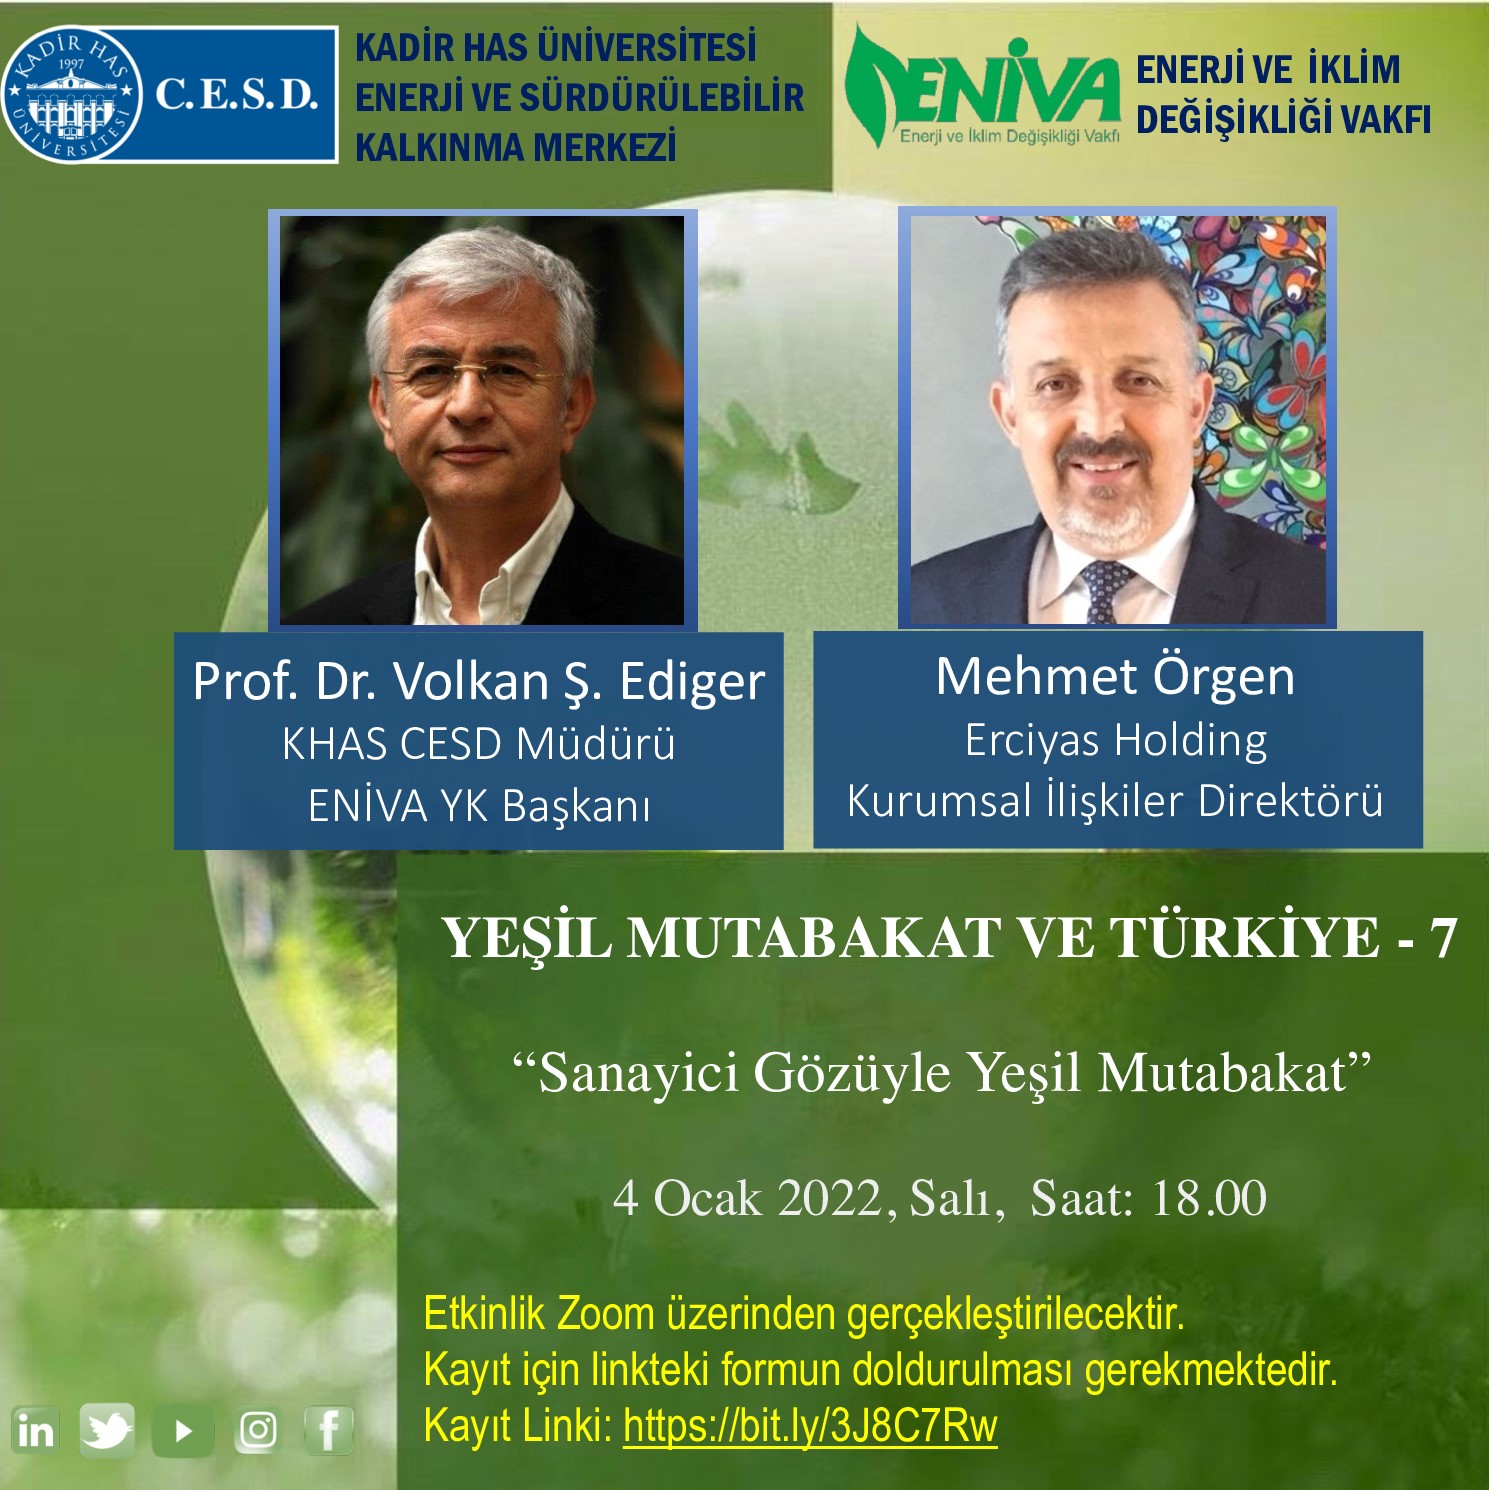 European Green Deal and Turkey-7: Mehmet Örgen